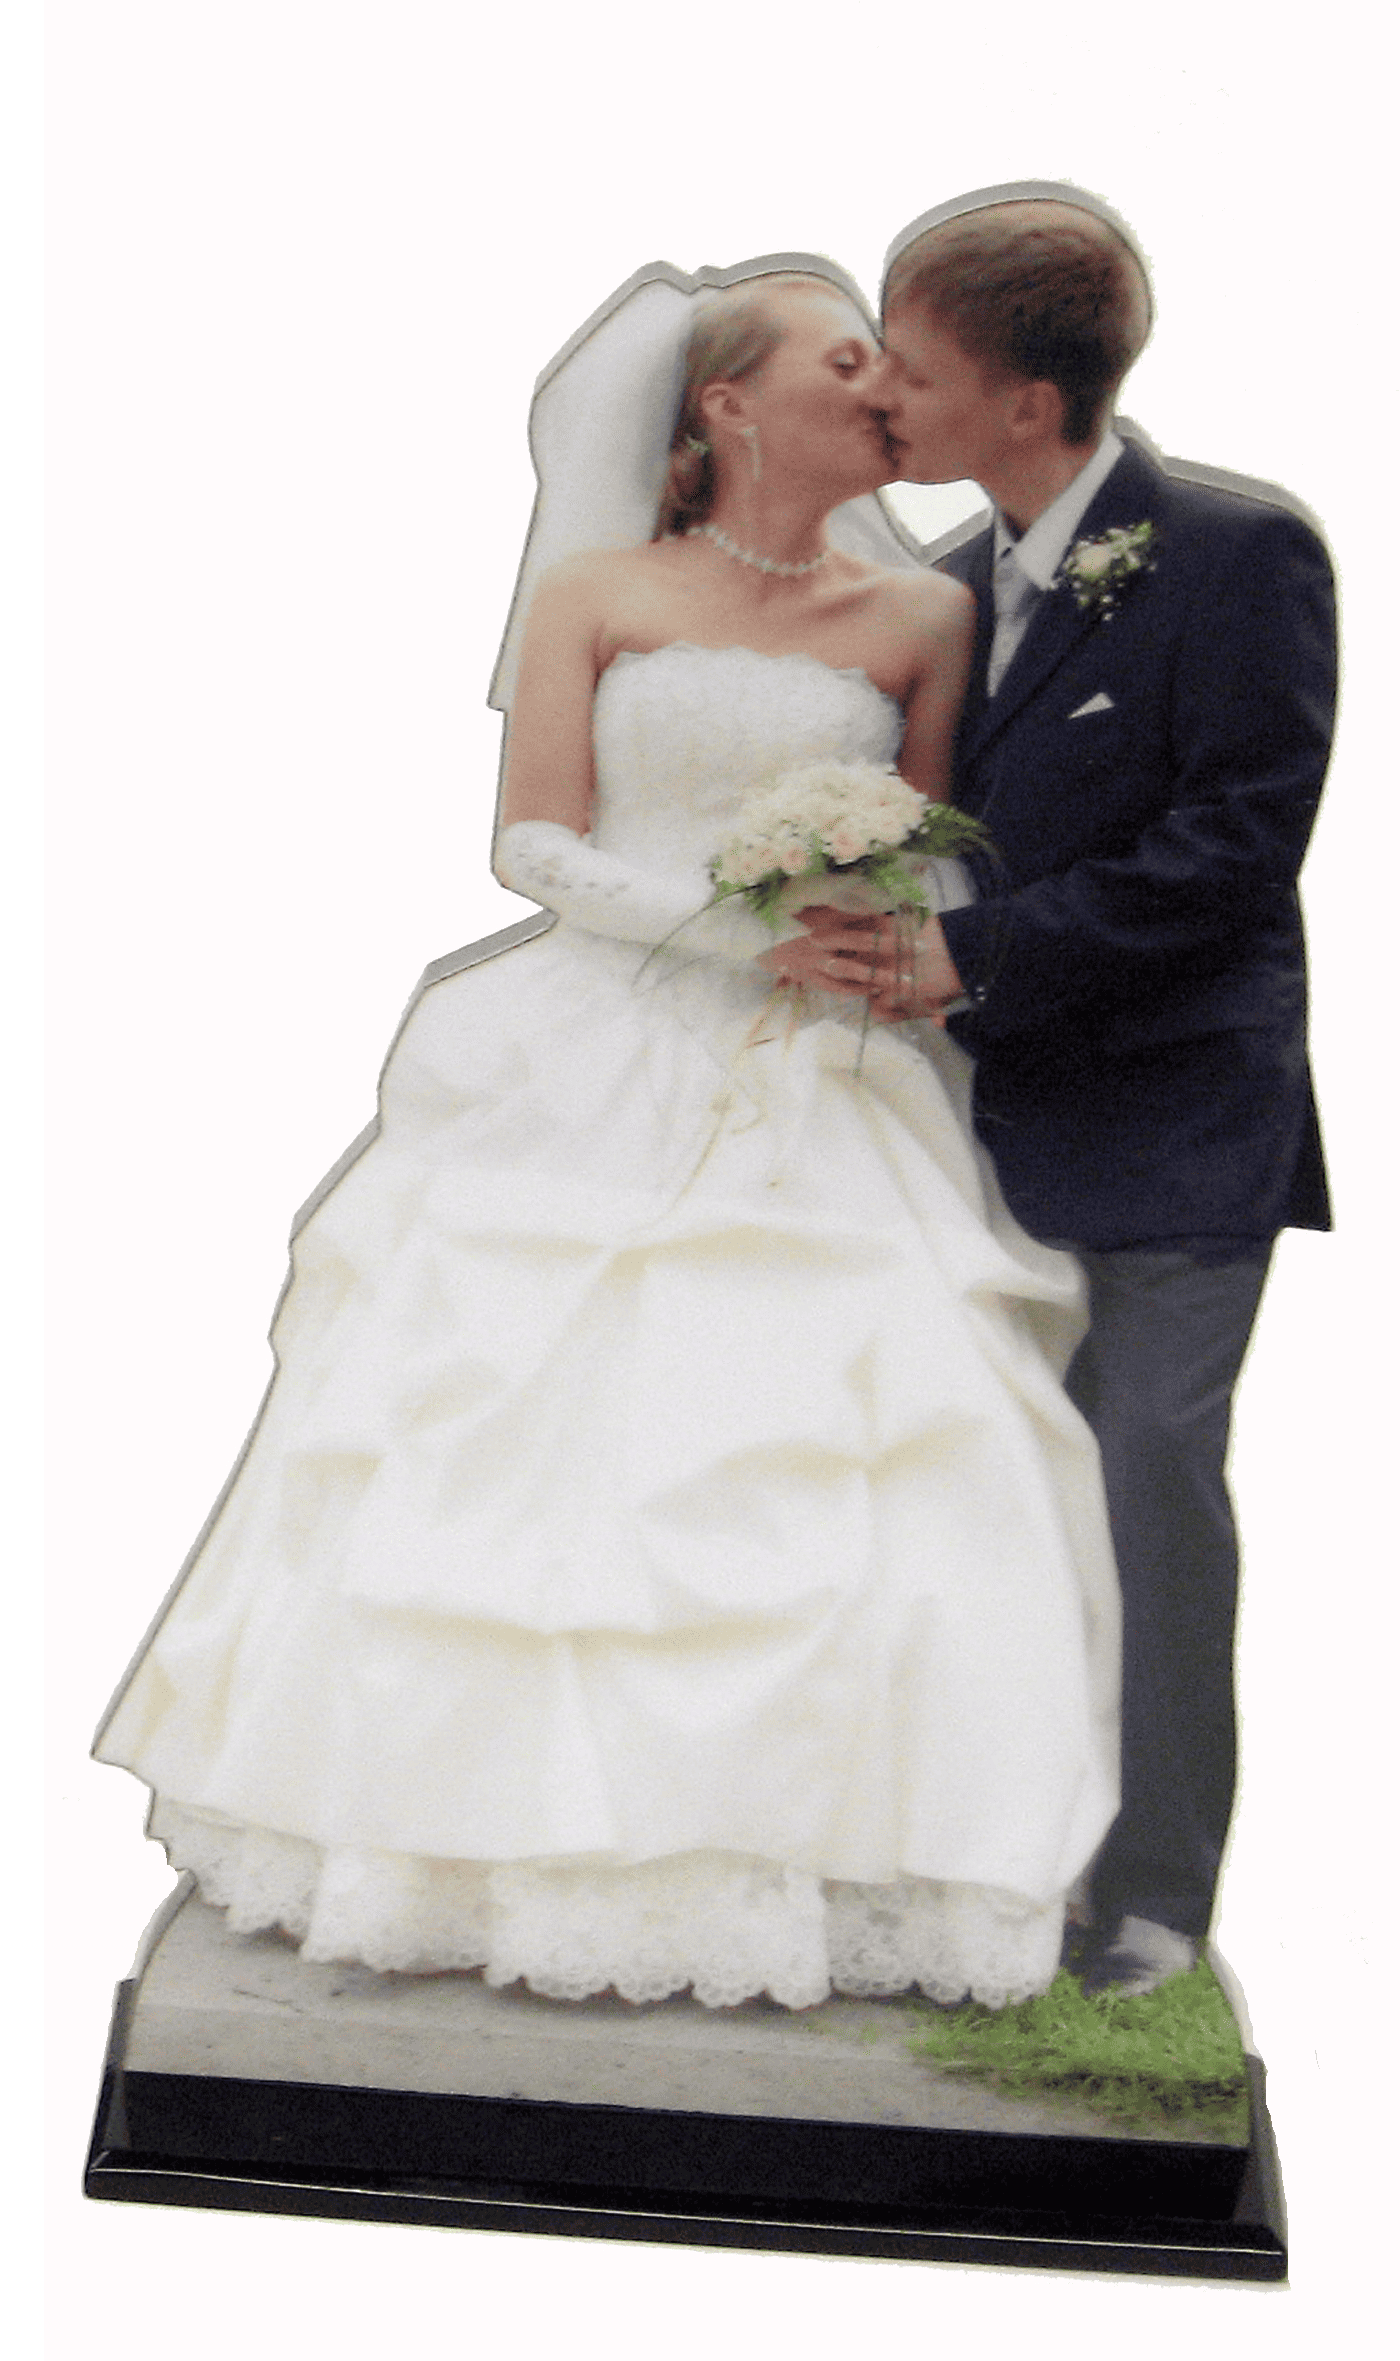 Wedding and anniversary photos make great cutouts